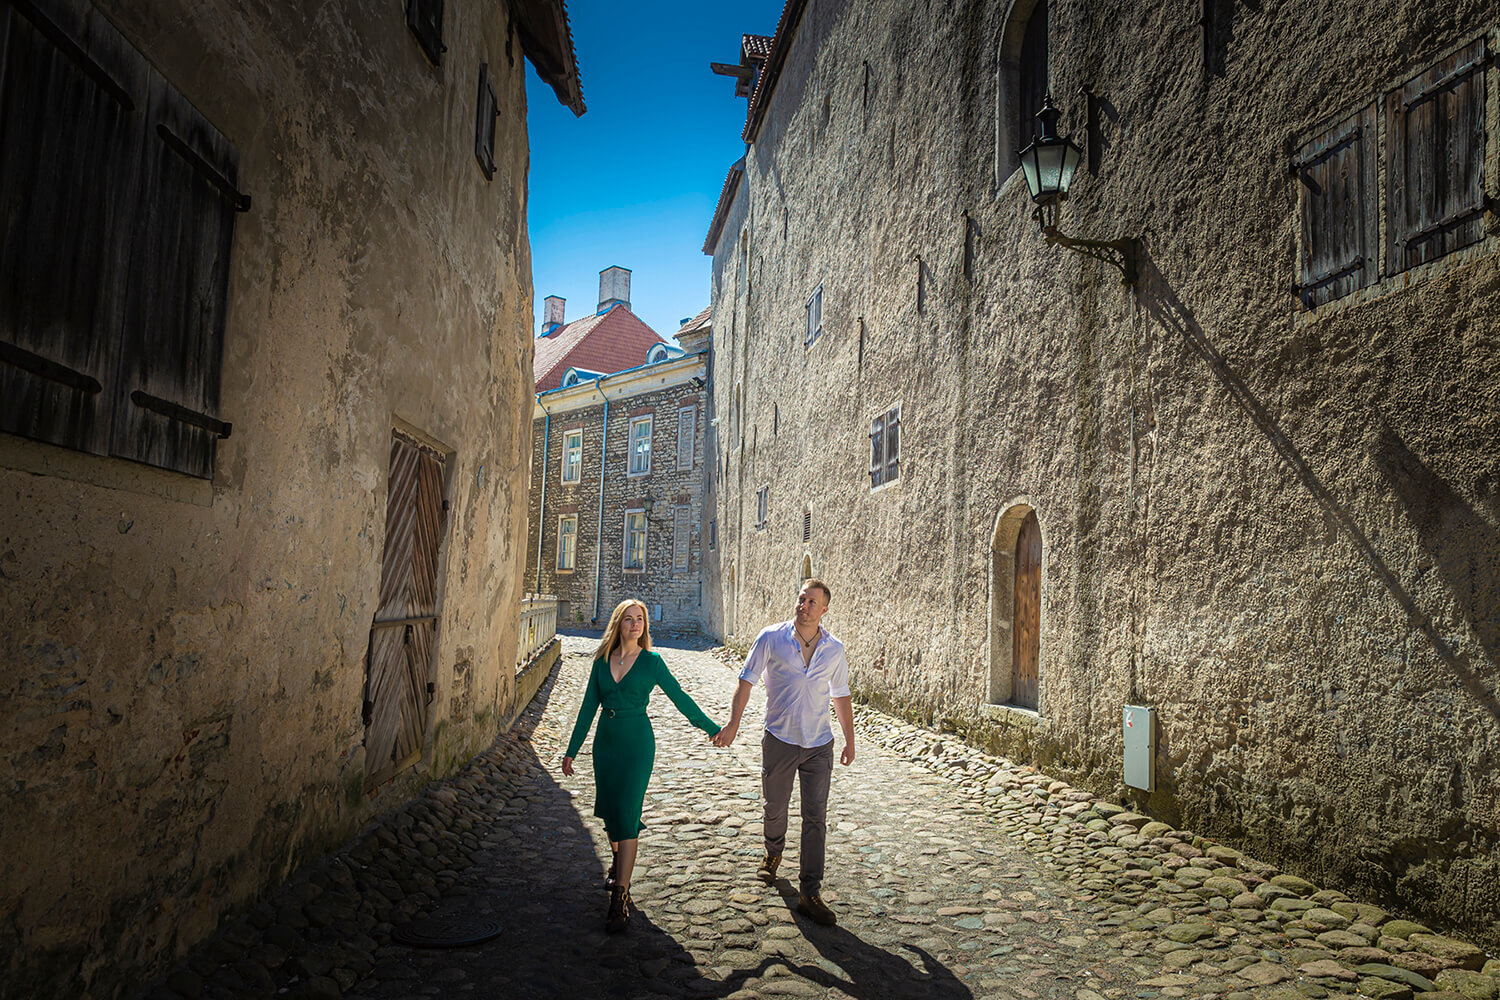 Discover the best instagram spots in Tallinn